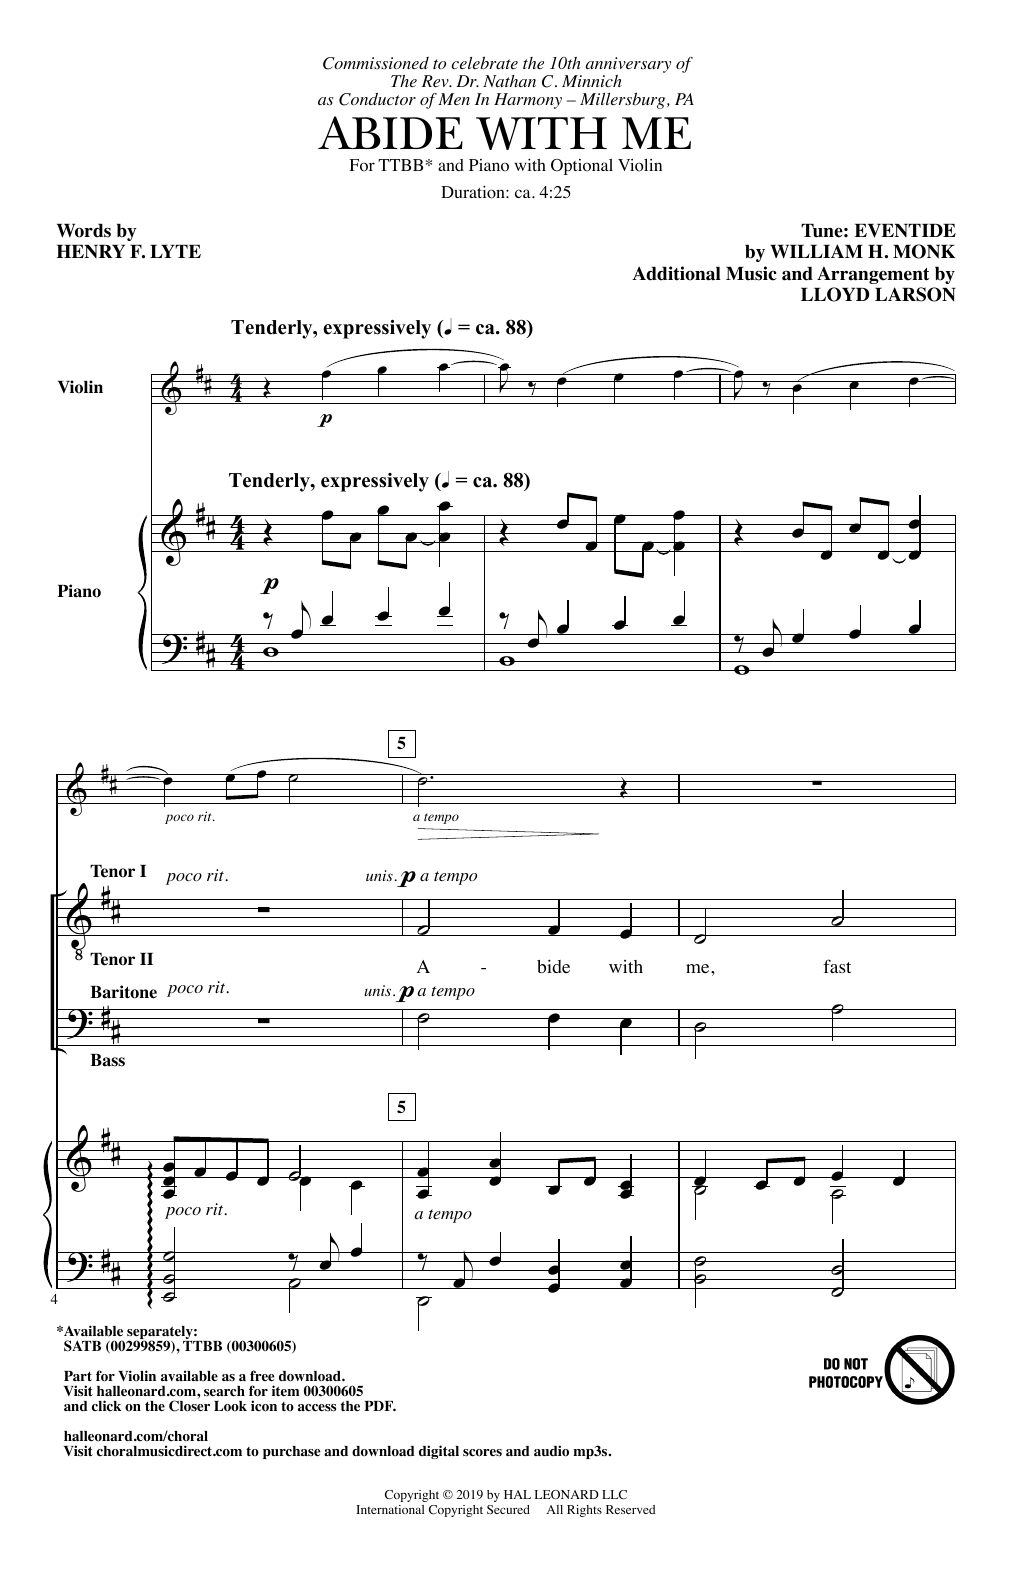 Henry F. Lyte Abide With Me (arr. Lloyd Larson) Sheet Music Notes & Chords for TTBB Choir - Download or Print PDF